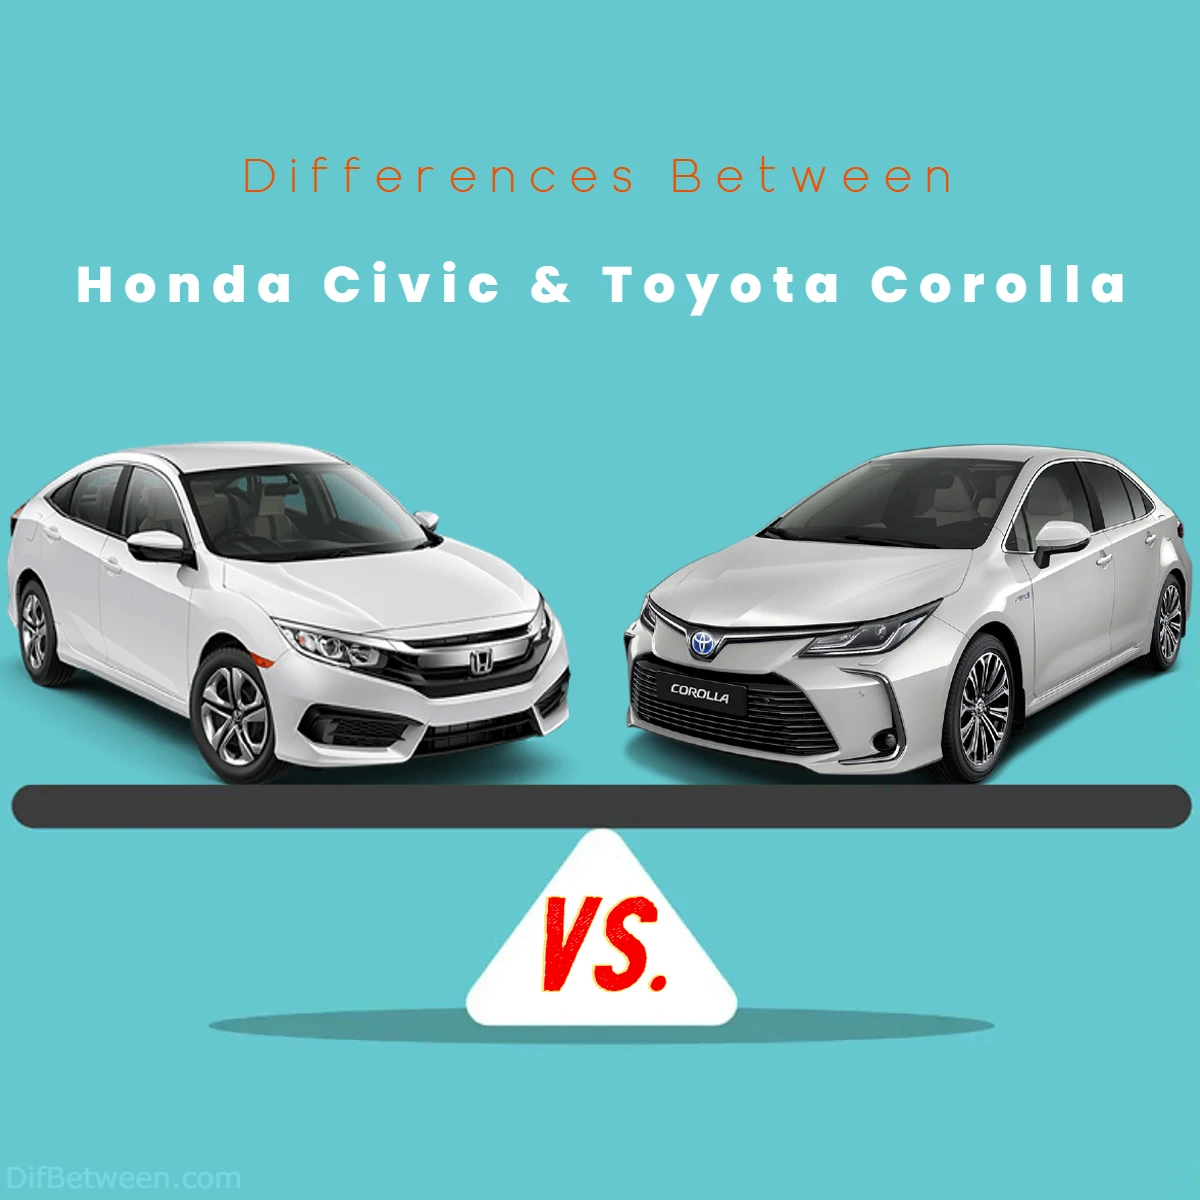 Differences Between Honda Civic vs Toyota Corolla